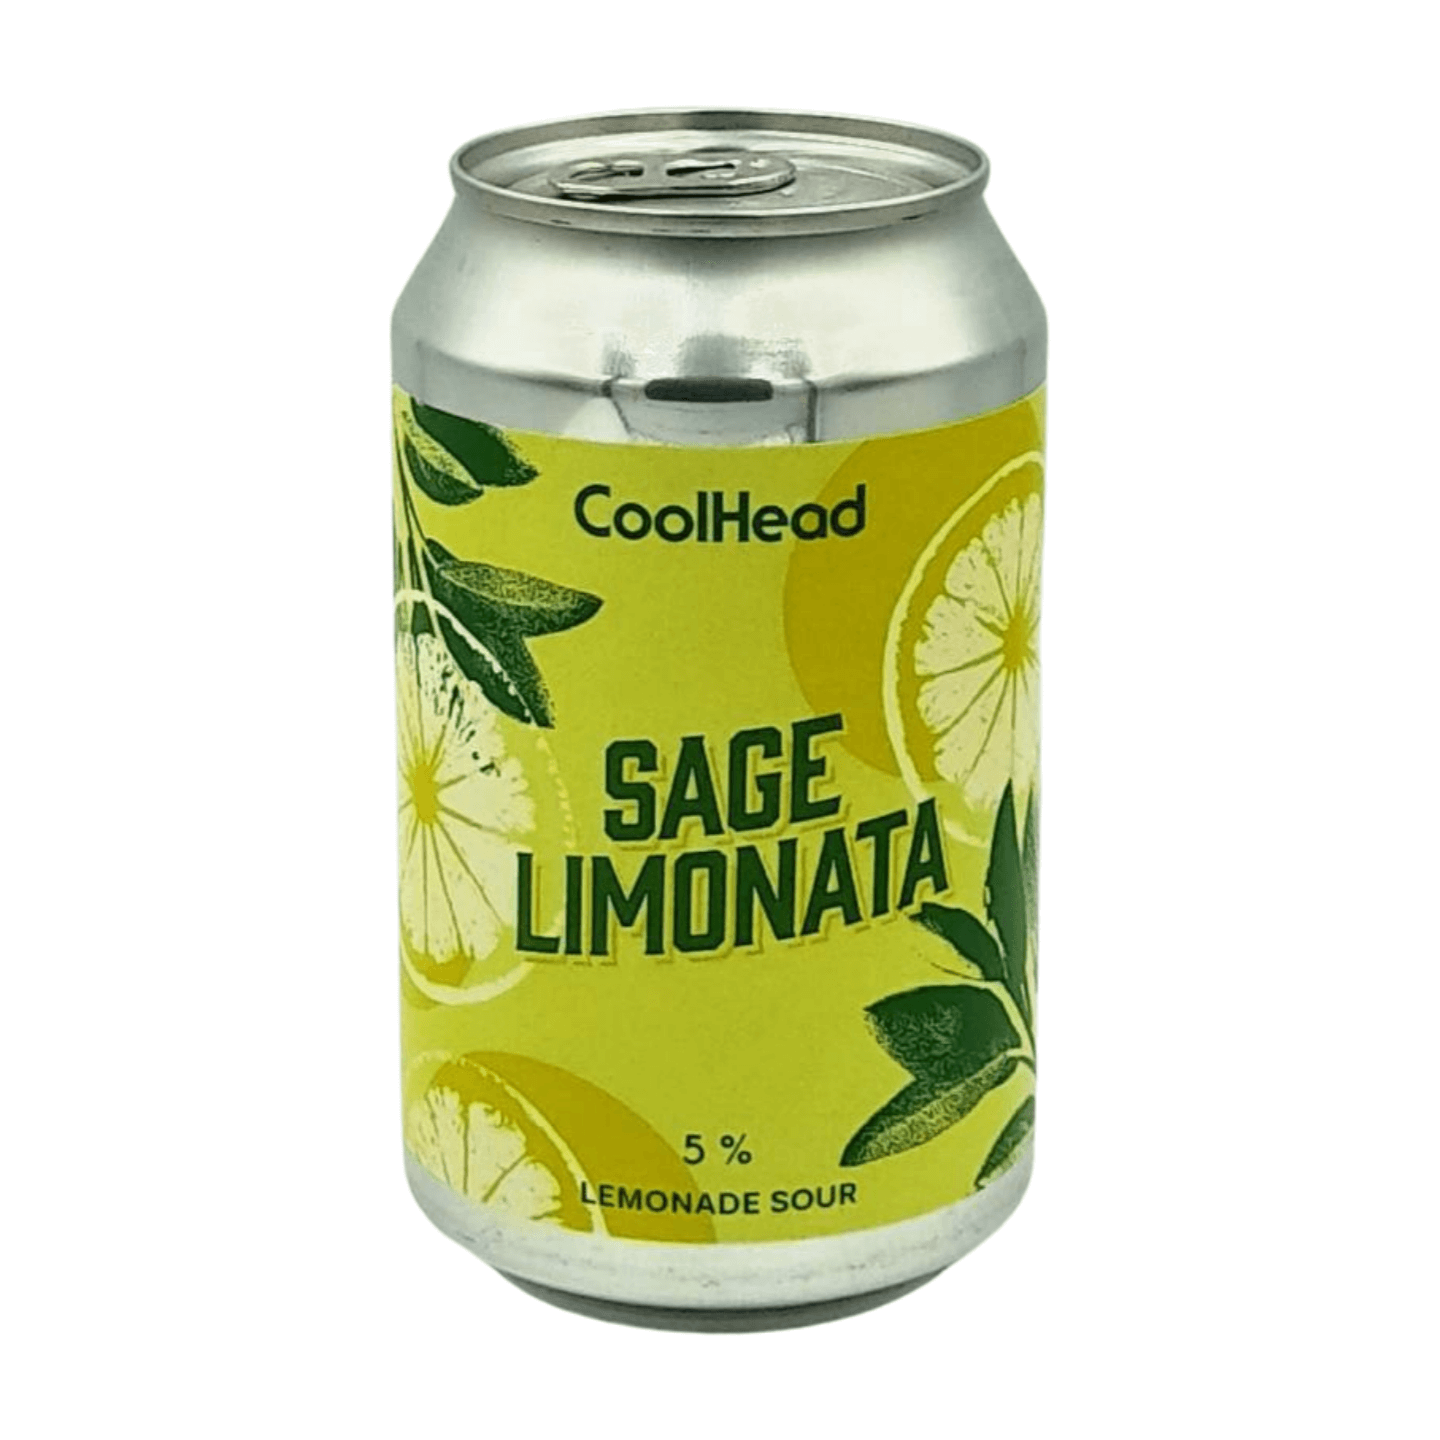 CoolHead Brew Sage Limonata | Lemonade Sour Webshop Online Verdins Bierwinkel Rotterdam